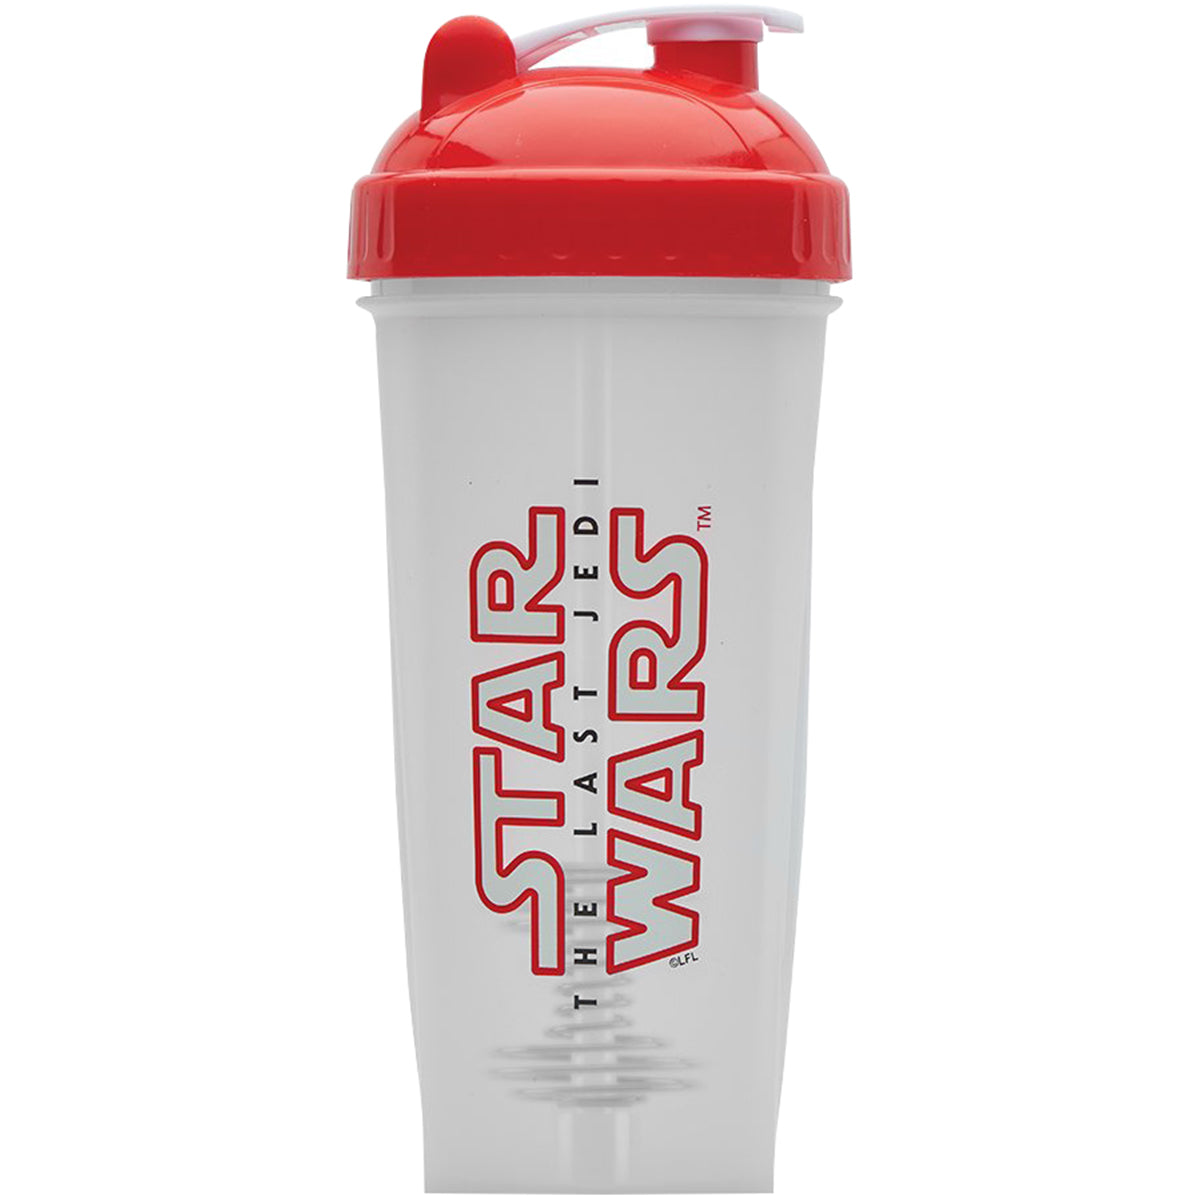 Performa PerfectShaker 28 oz. Star Wars Shaker Cup Bottle, Last Jedi Logo, White PerfectShaker